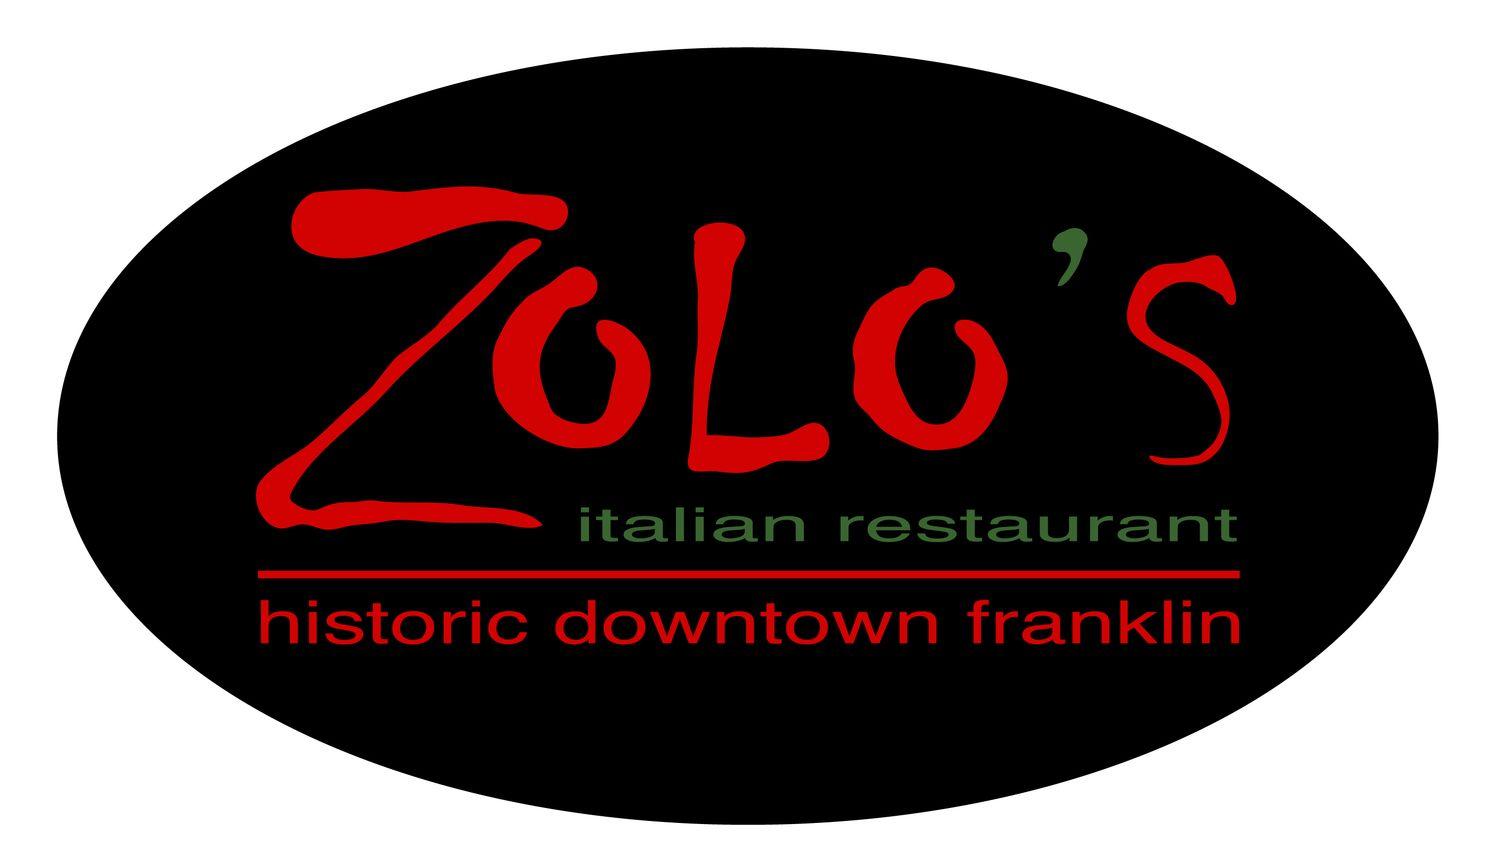 Restaurant with Red Oval Logo - Zolos Italian RestaurantZolo's Italian Restaurant